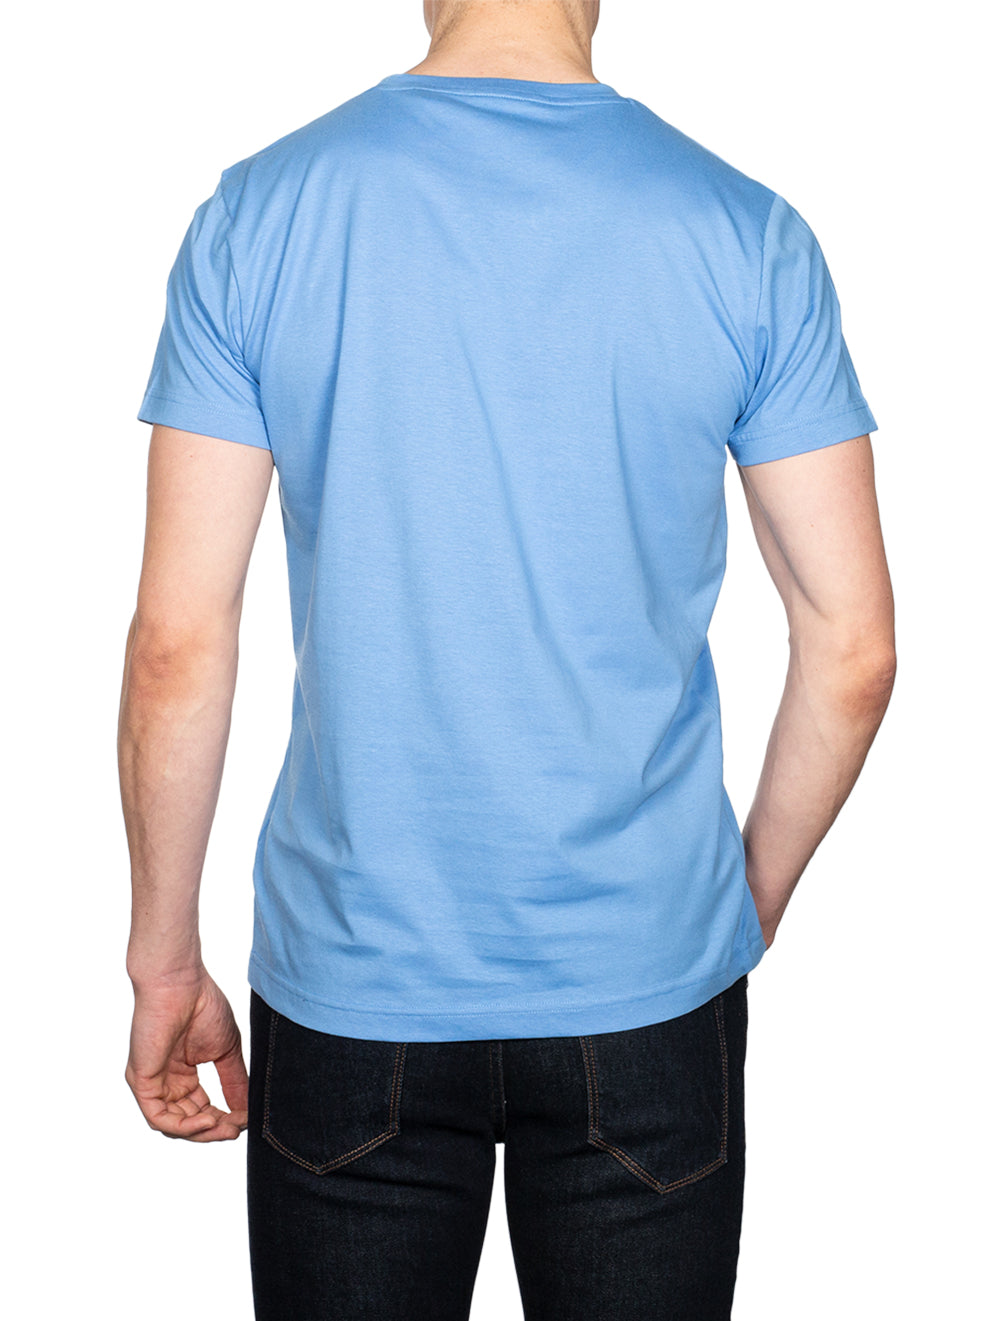 Gant Short Sleeve T-shirt  Pacific Blue